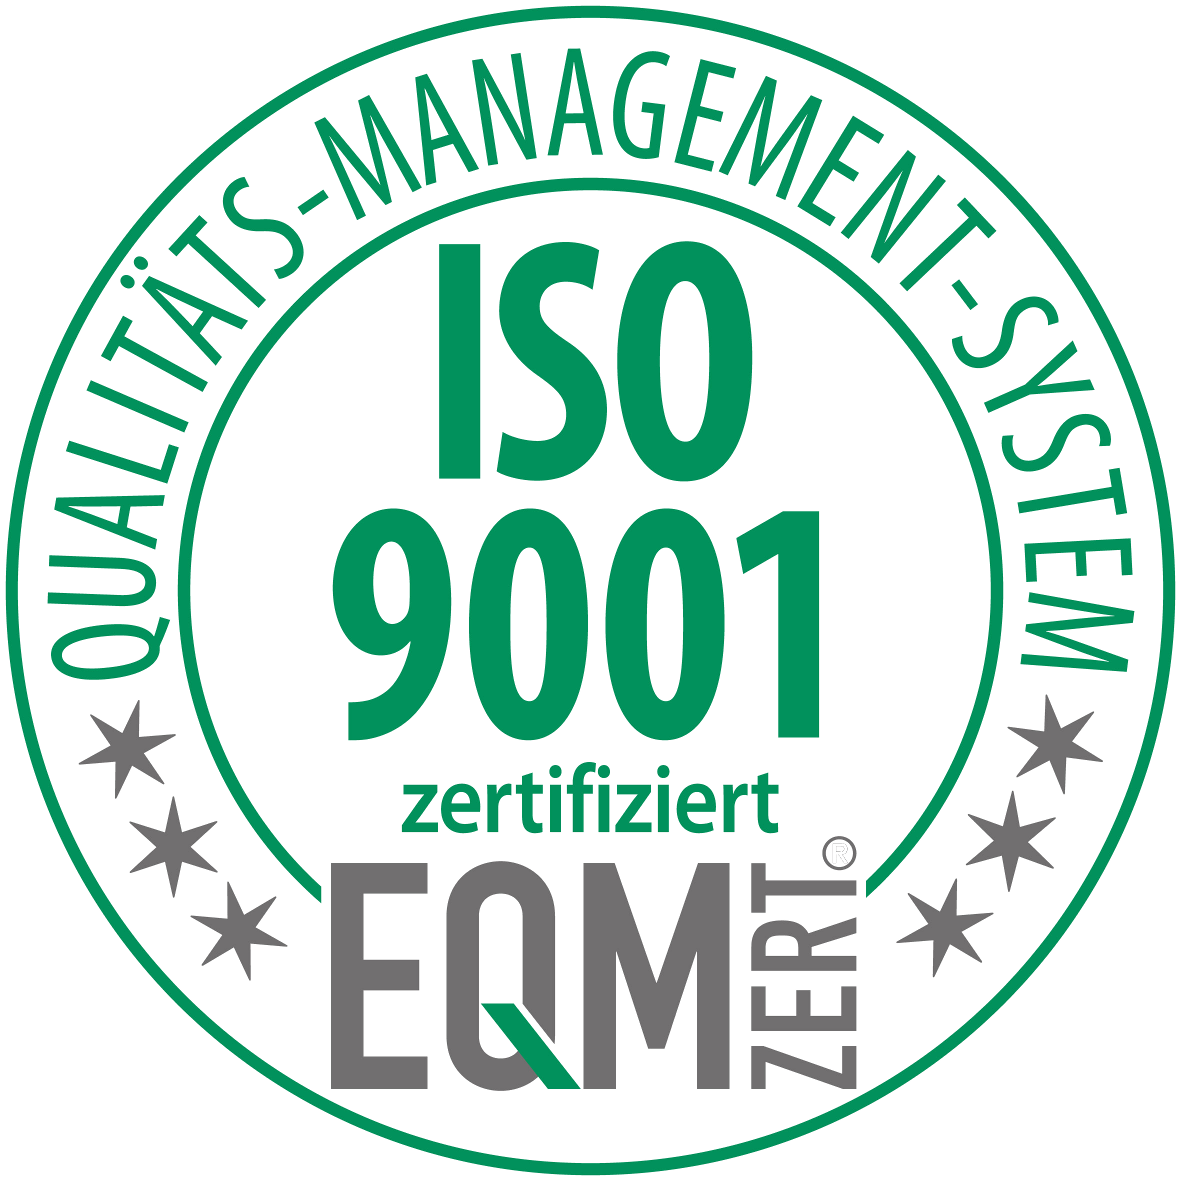 EQM ZERT ISO 9001